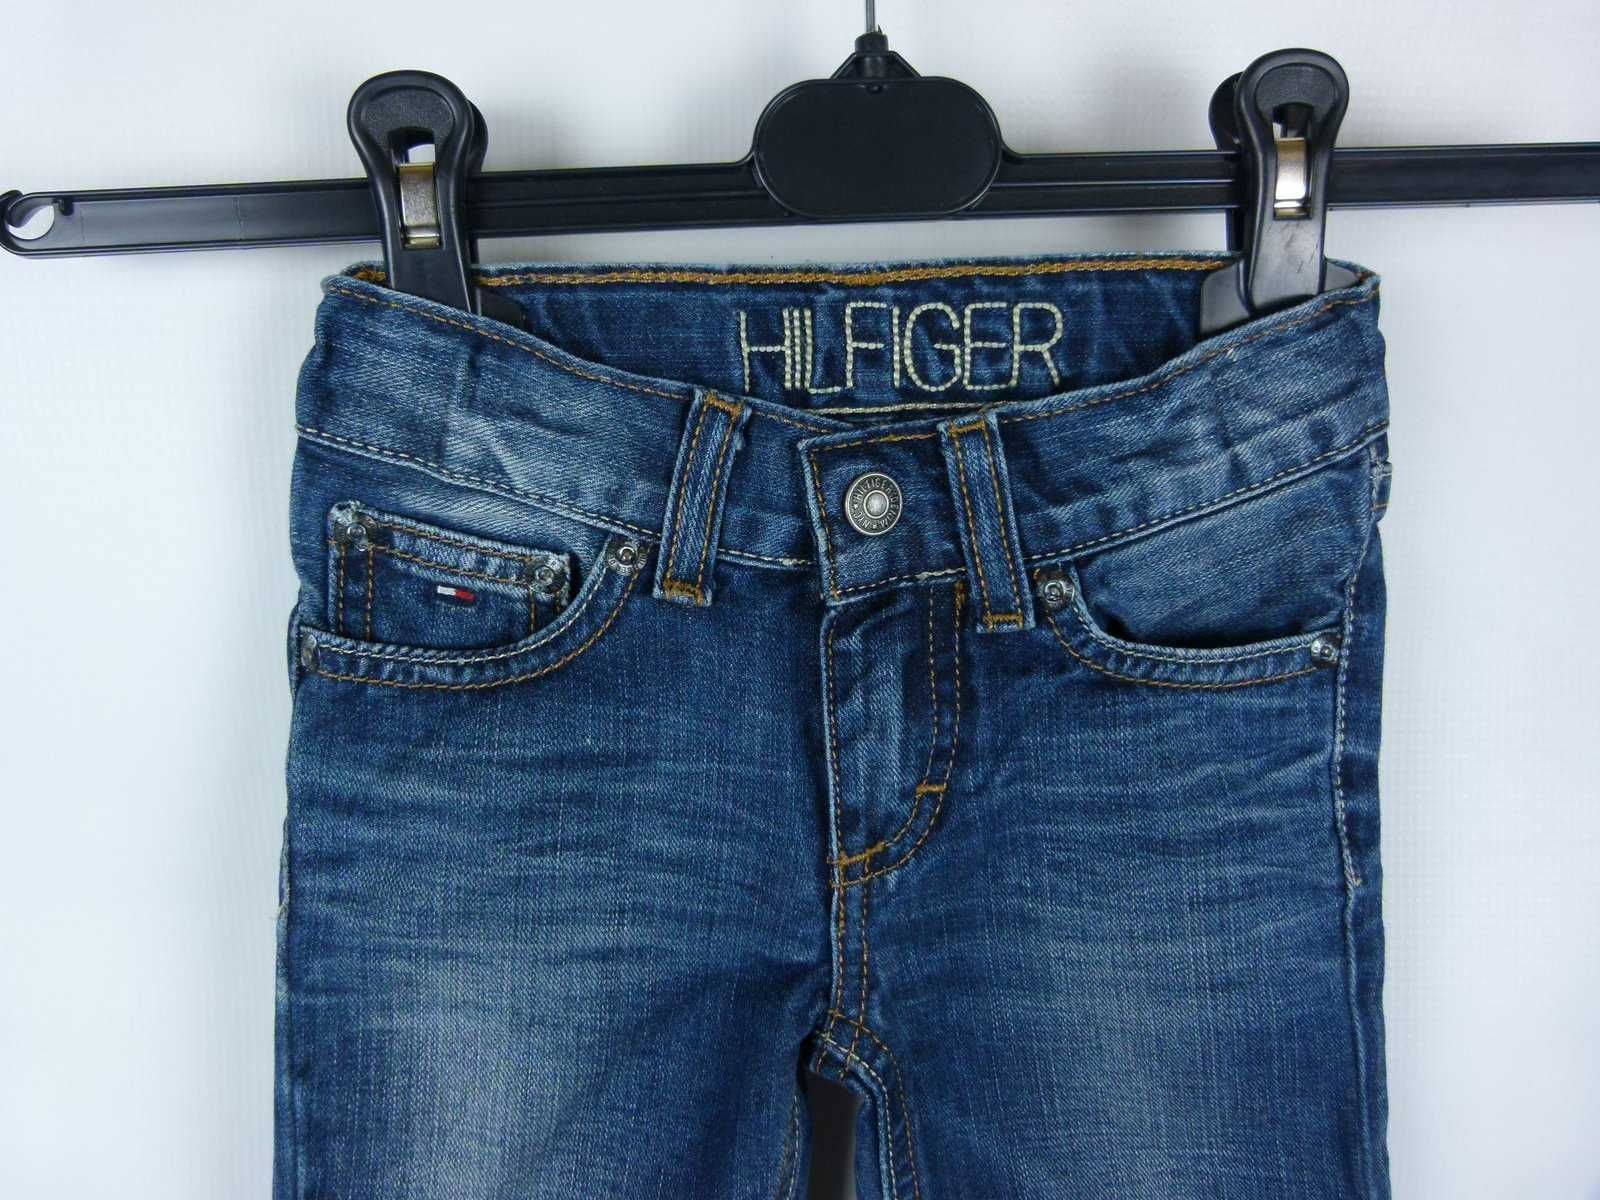 Tommy Hilfiger spodnie jeans 18-24 msc/ 86 cm